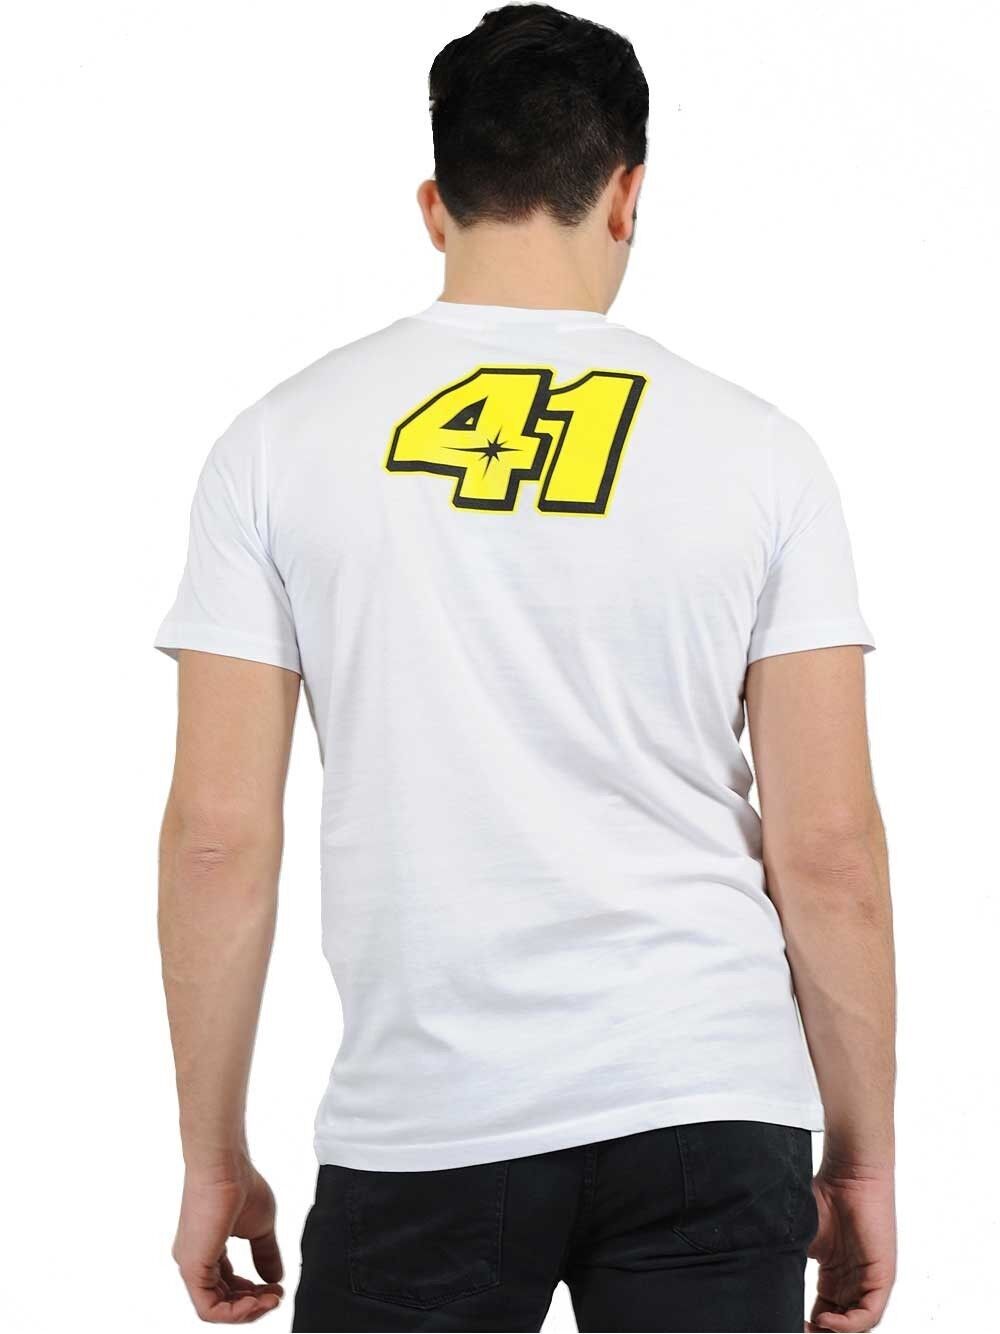 Official Aleix Espargaro Mans 41 T Shirt. - 16 32302